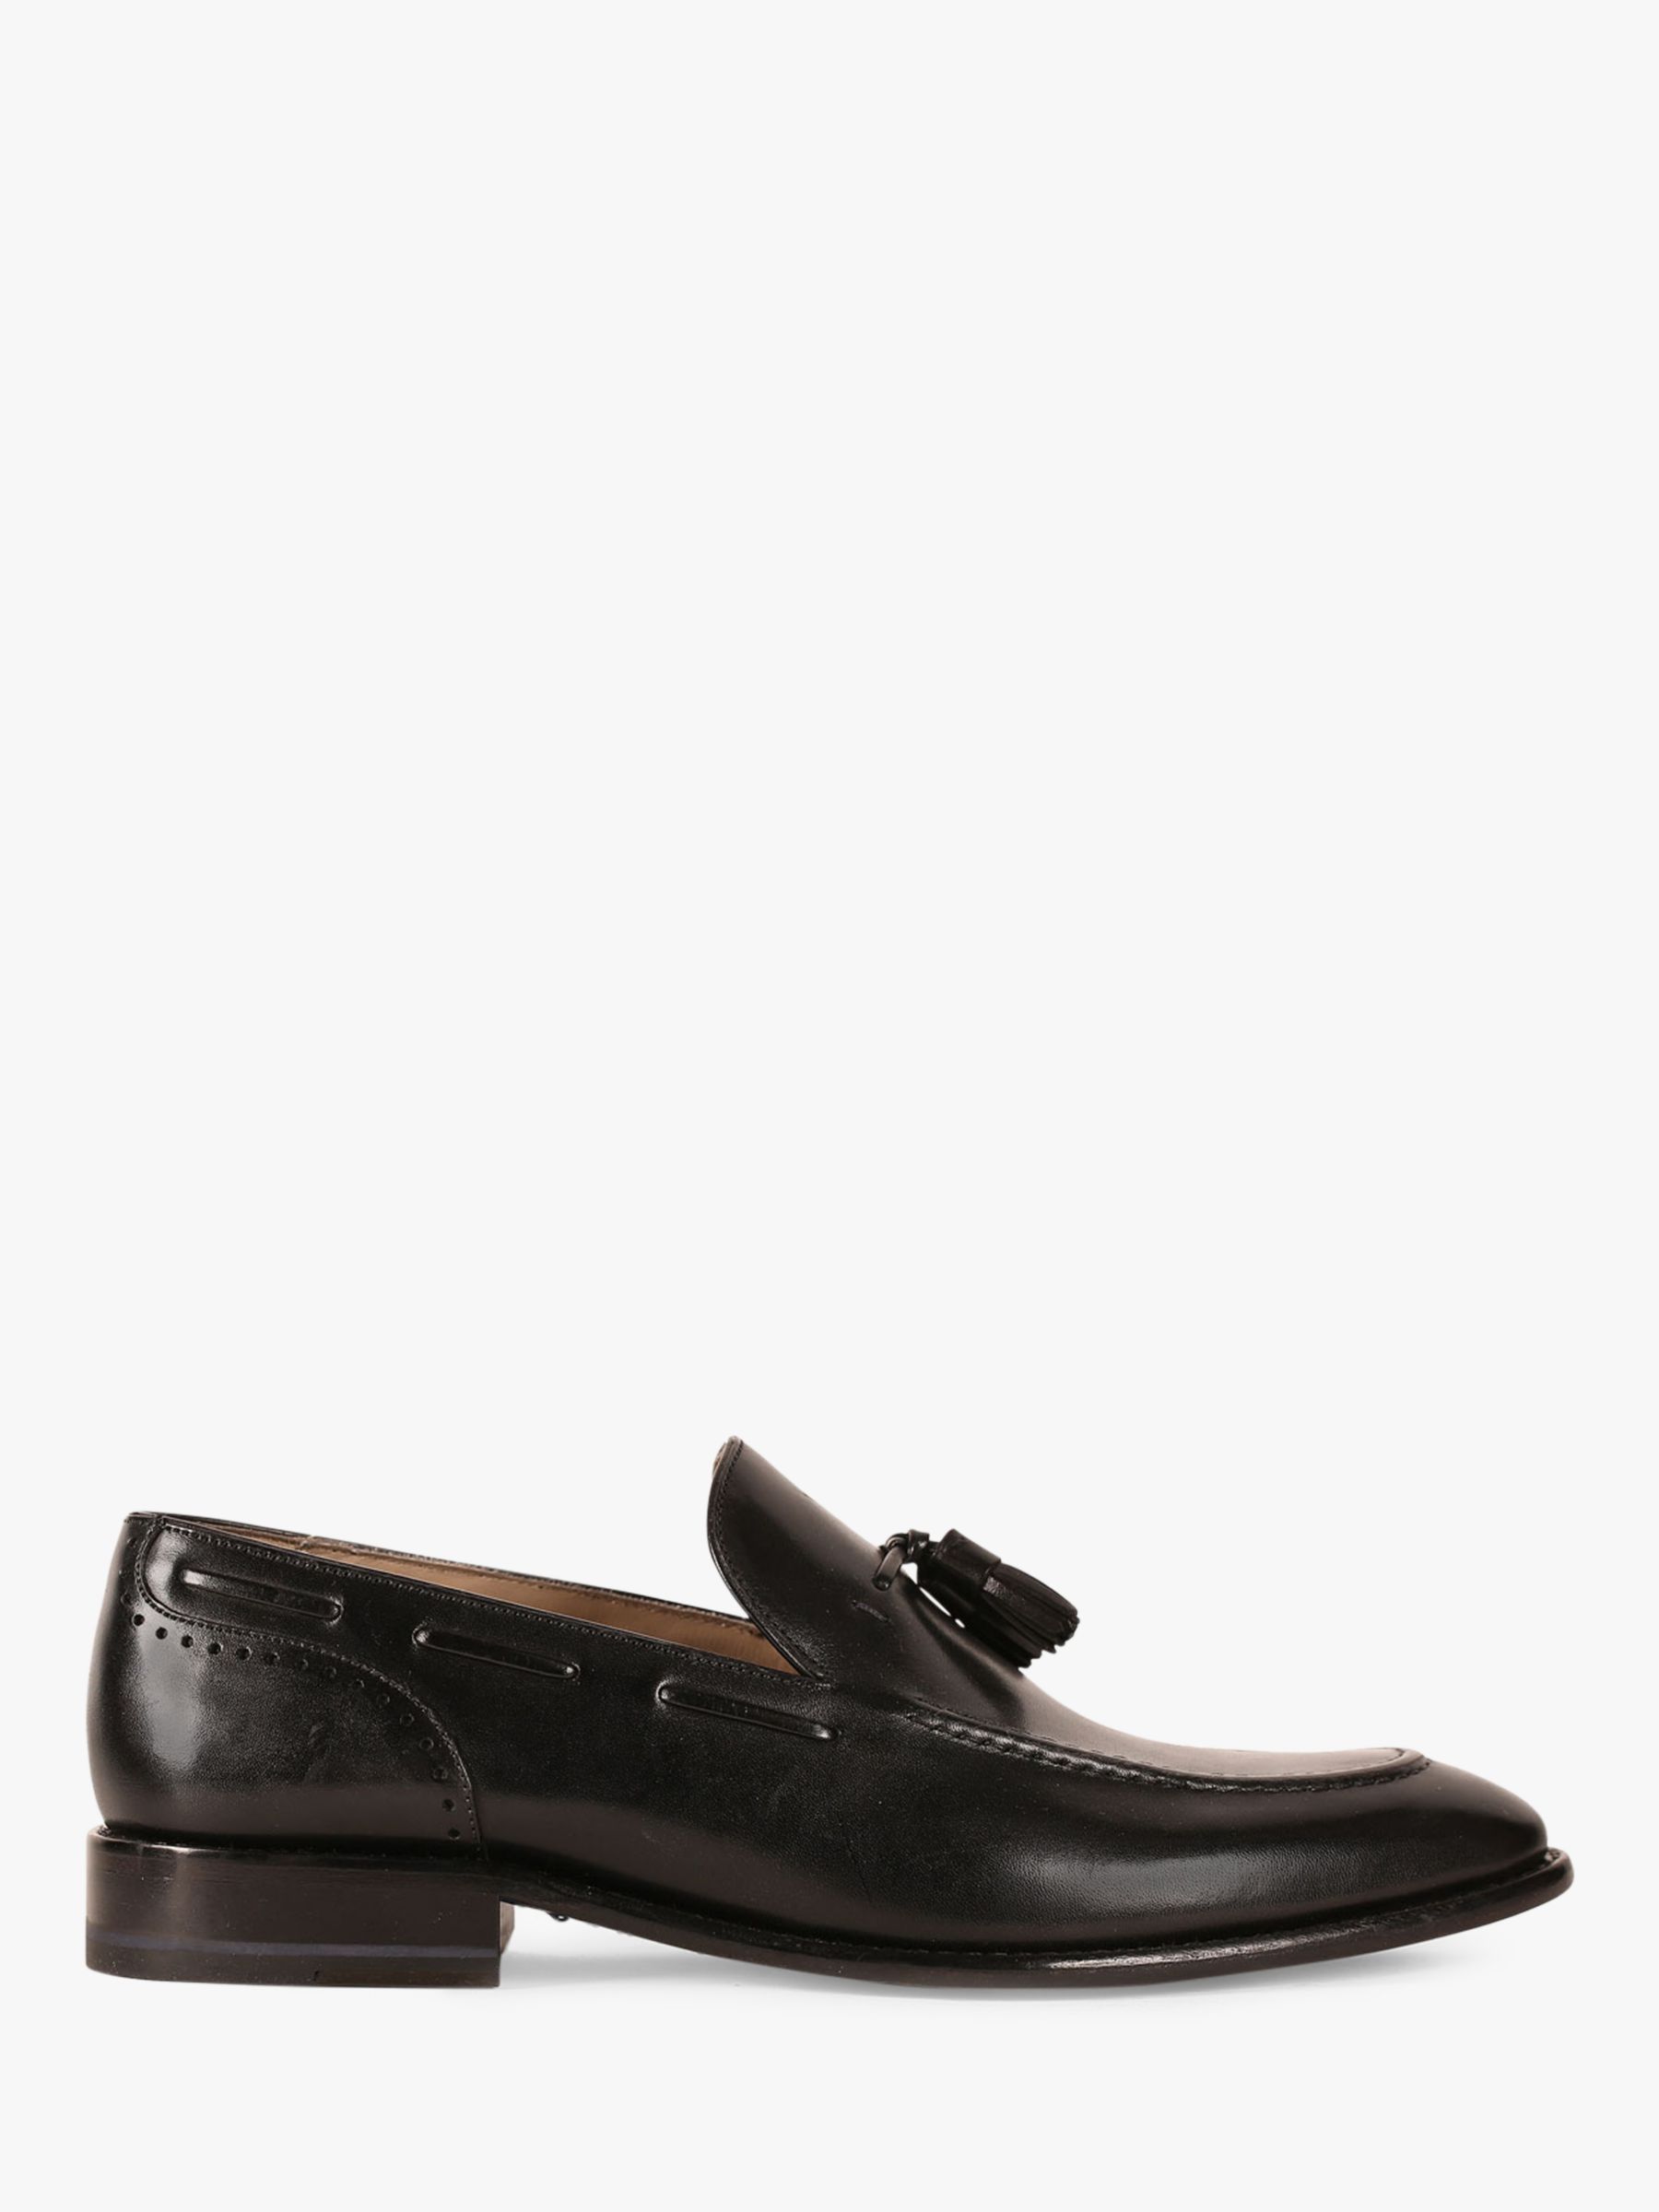 Oliver Sweeney Keasden Tassel Leather Loafers, Black